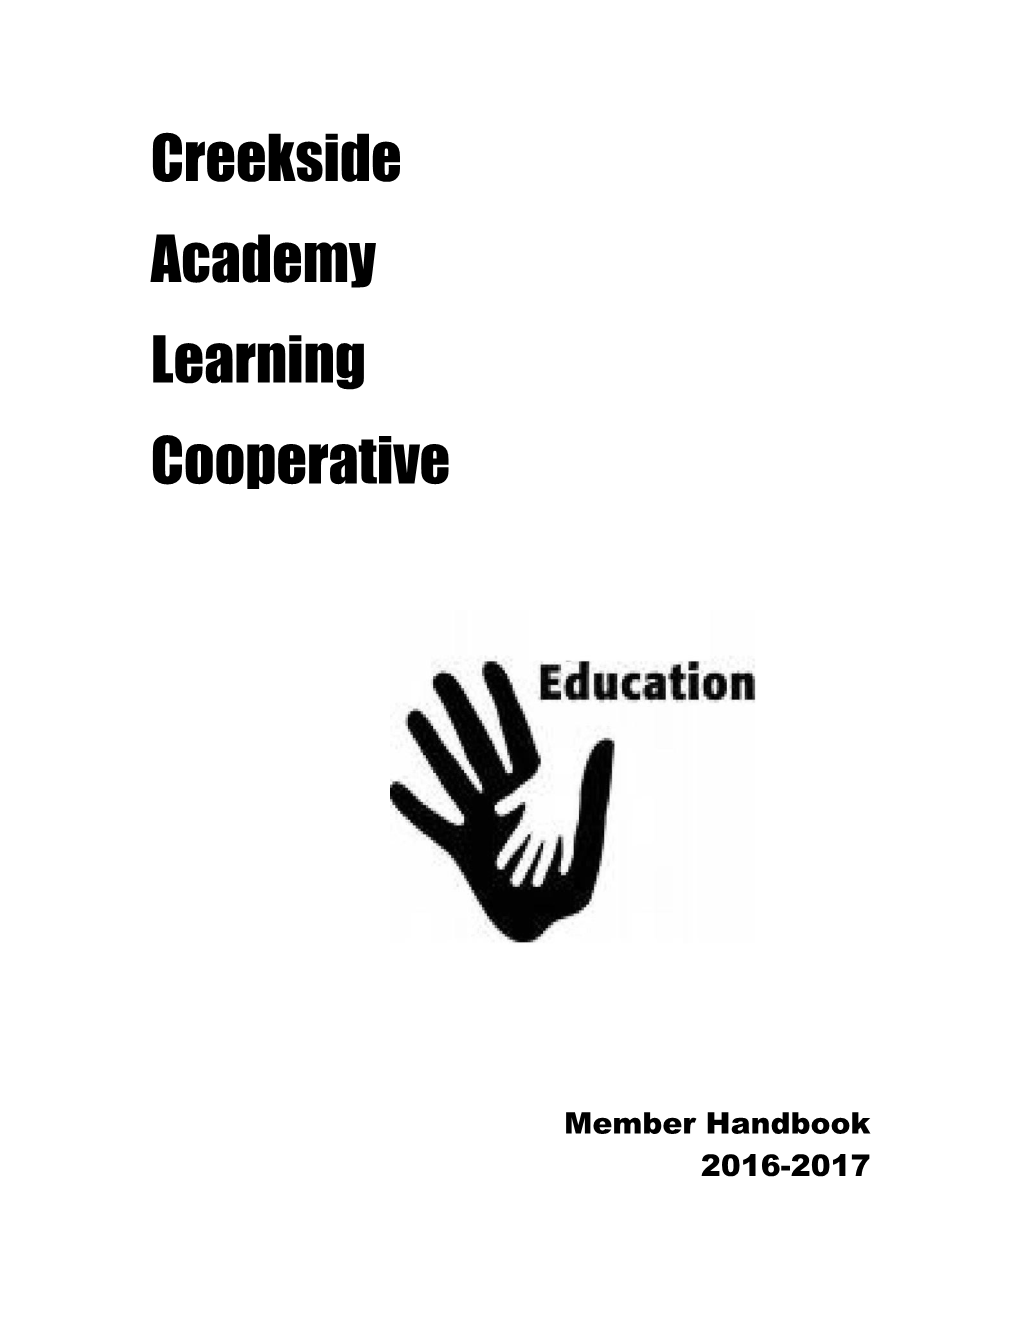 Reekside Academy Learning Cooperative Handbook